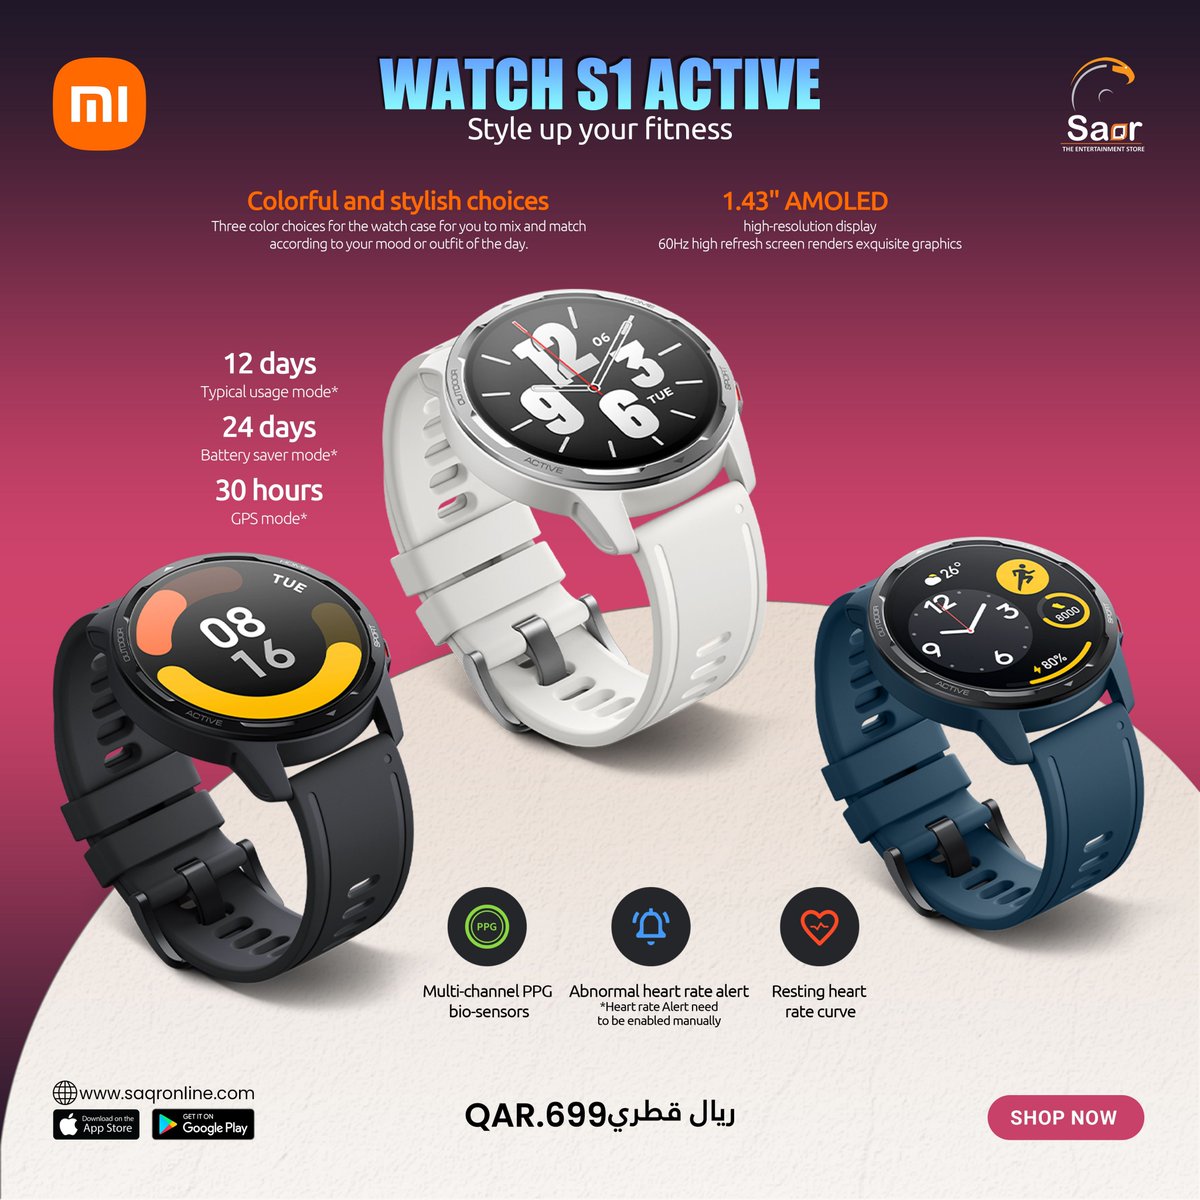 Xiaomi Watch S1 Active GL
#mi #xioami #watch #watchs1 #watchs1active #amoled #stylishchoices #fitnesswatch #stylishwatch #stylishwatches #saqr #saqrontop #saqrstore #saqrstores 
Buy now : saqronline.com/watch.html